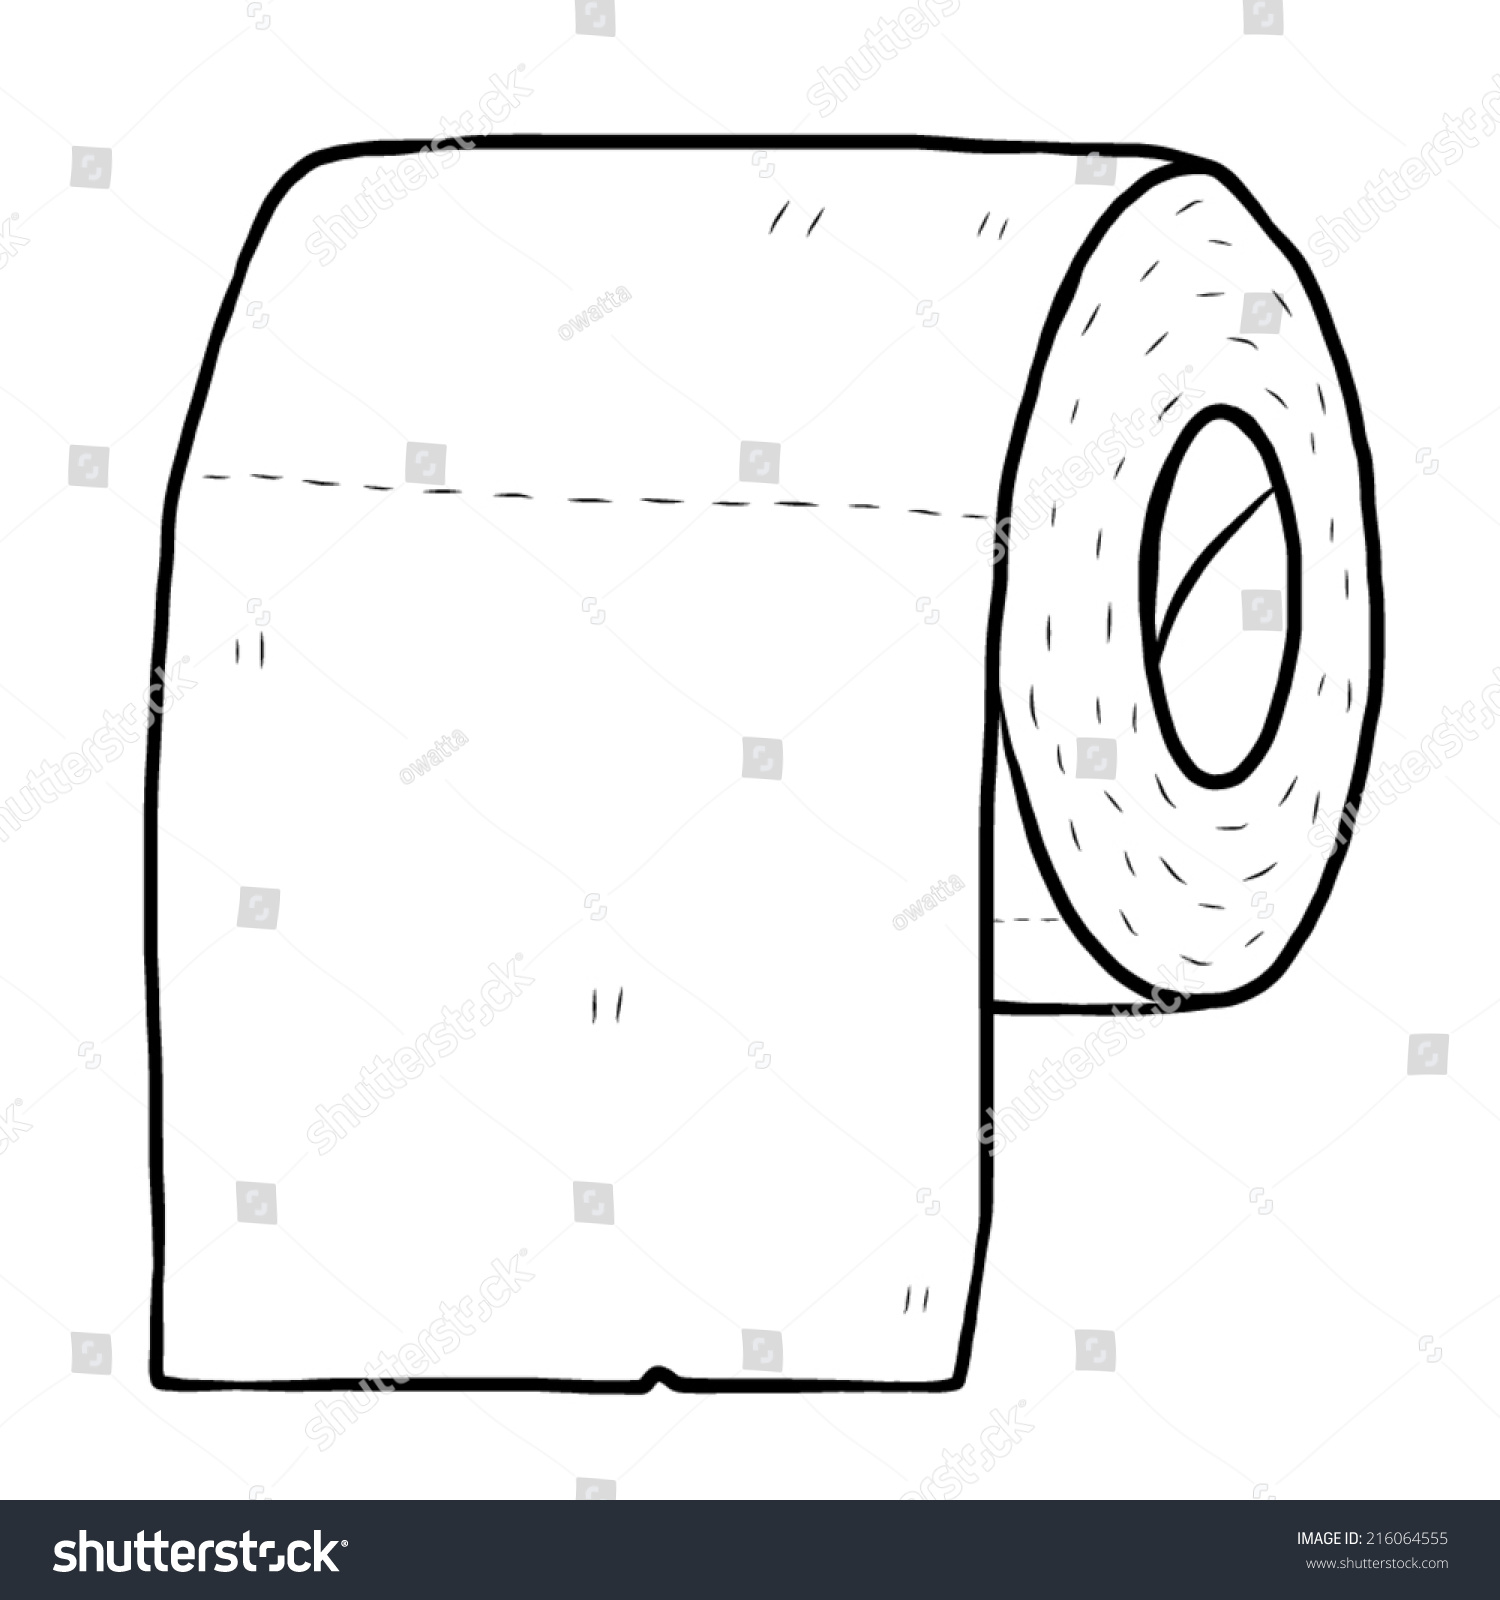 toilet tissue clipart - photo #50